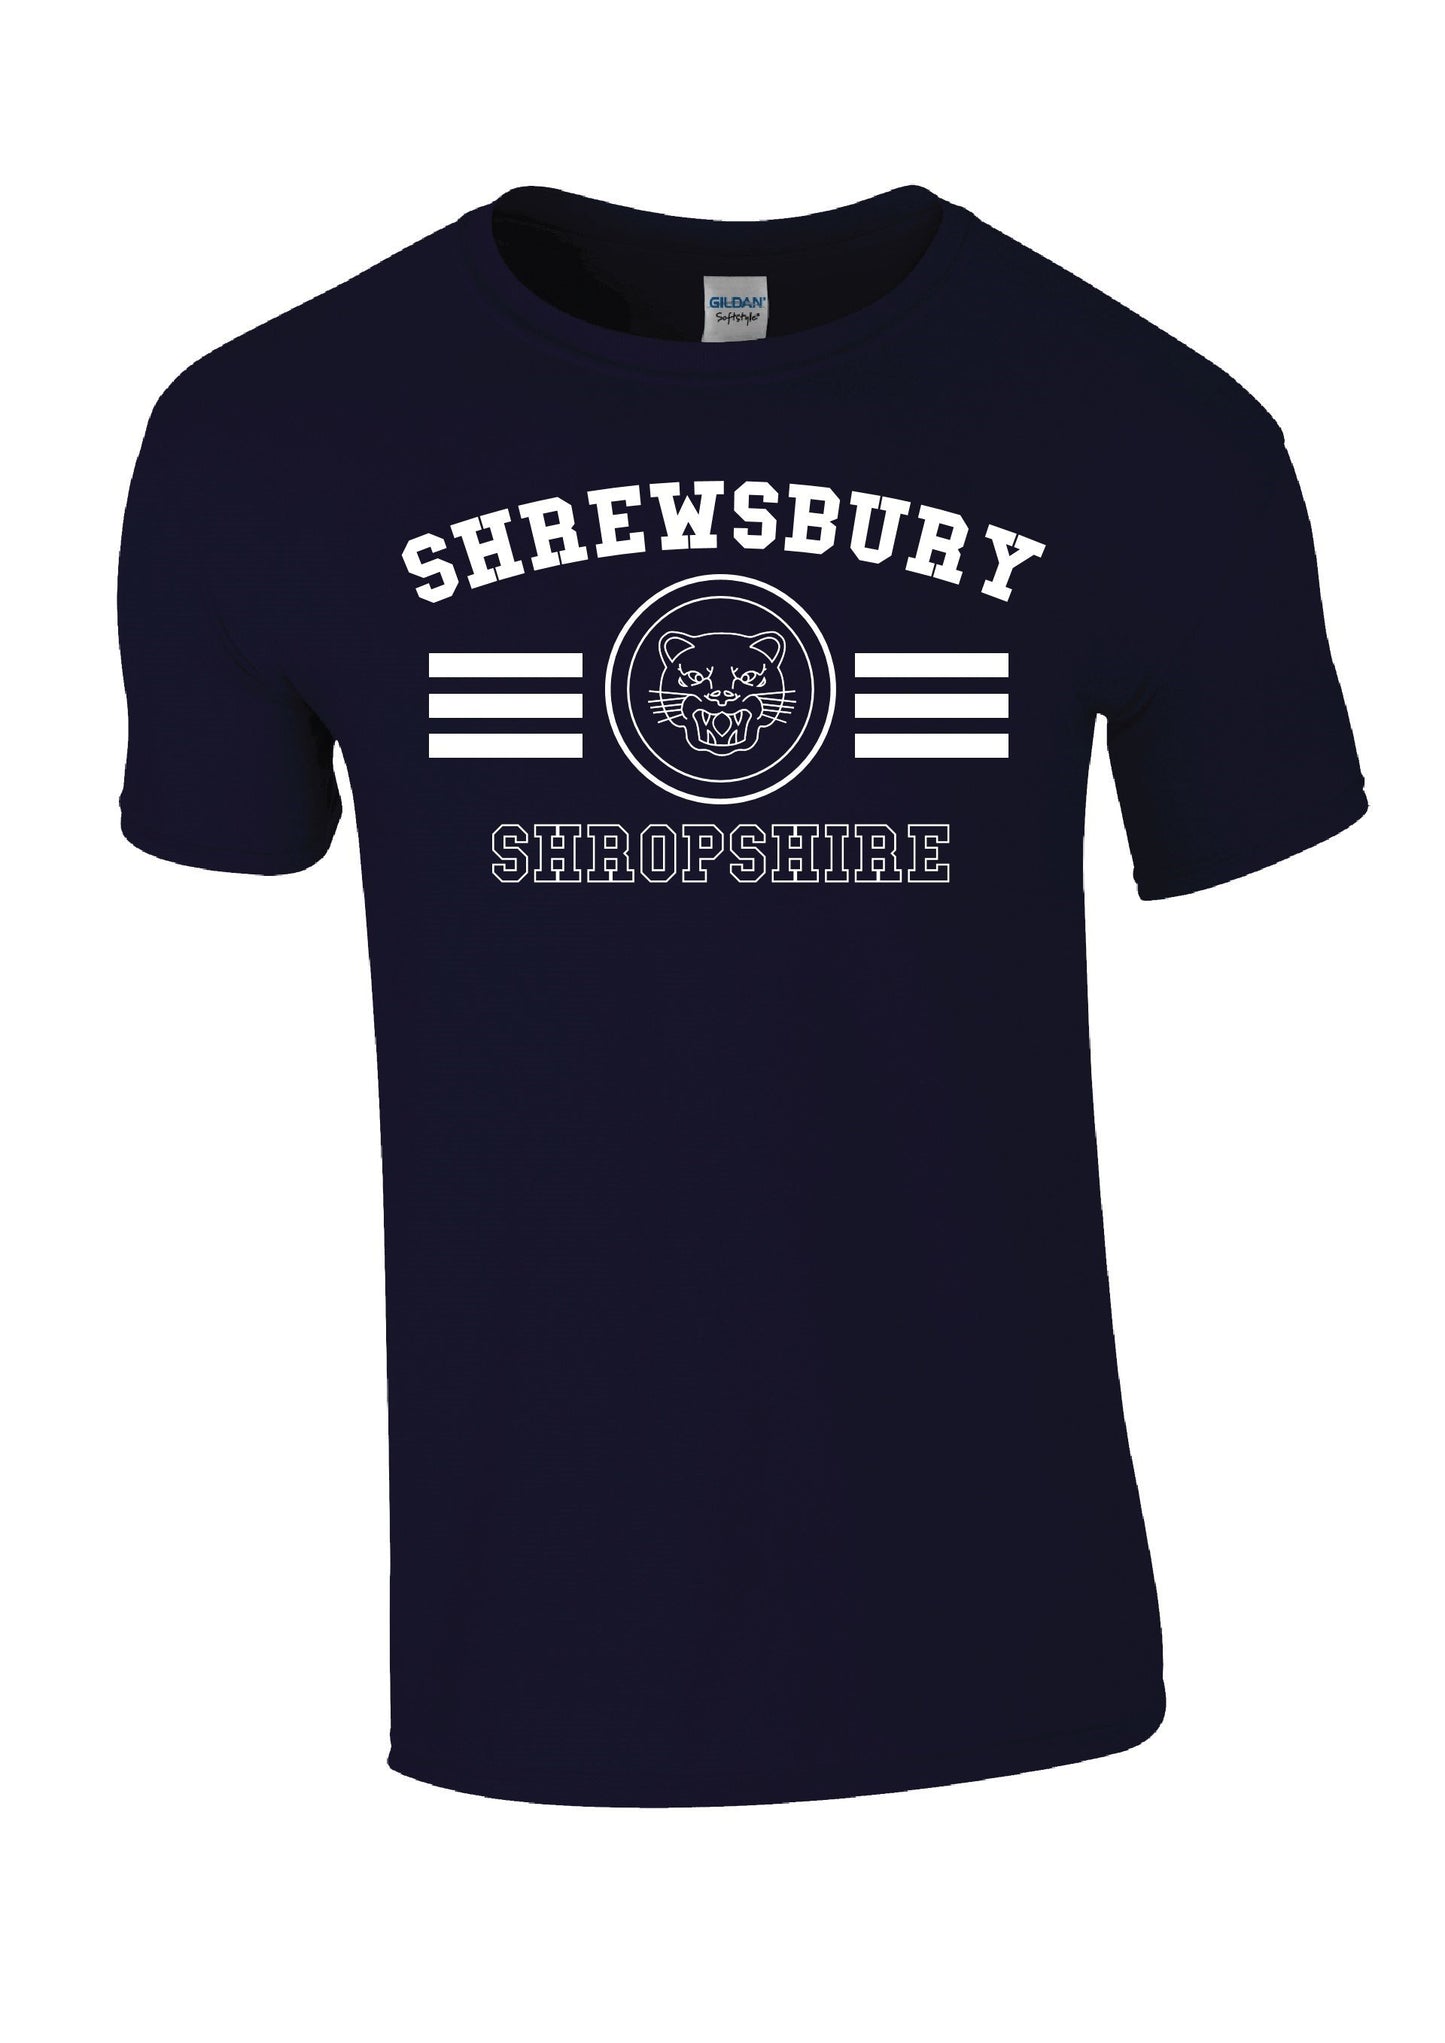 Shrewsbury Tiger T-shirt - Navy - L